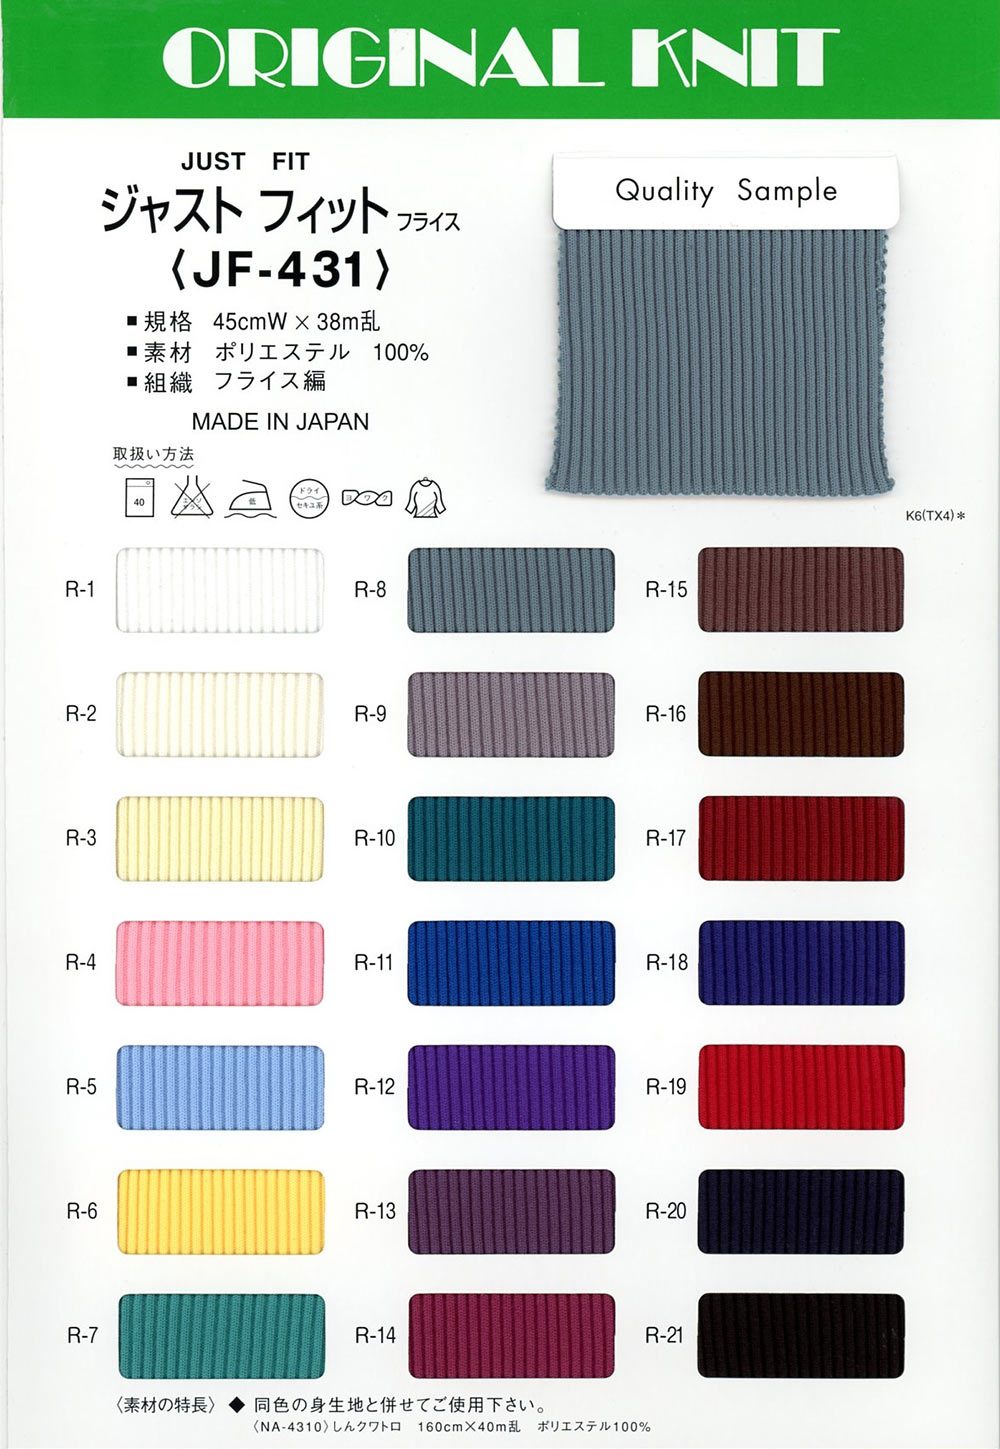 JF431 Côtes Circulaires Just Fit[Fabrication De Textile] Masuda